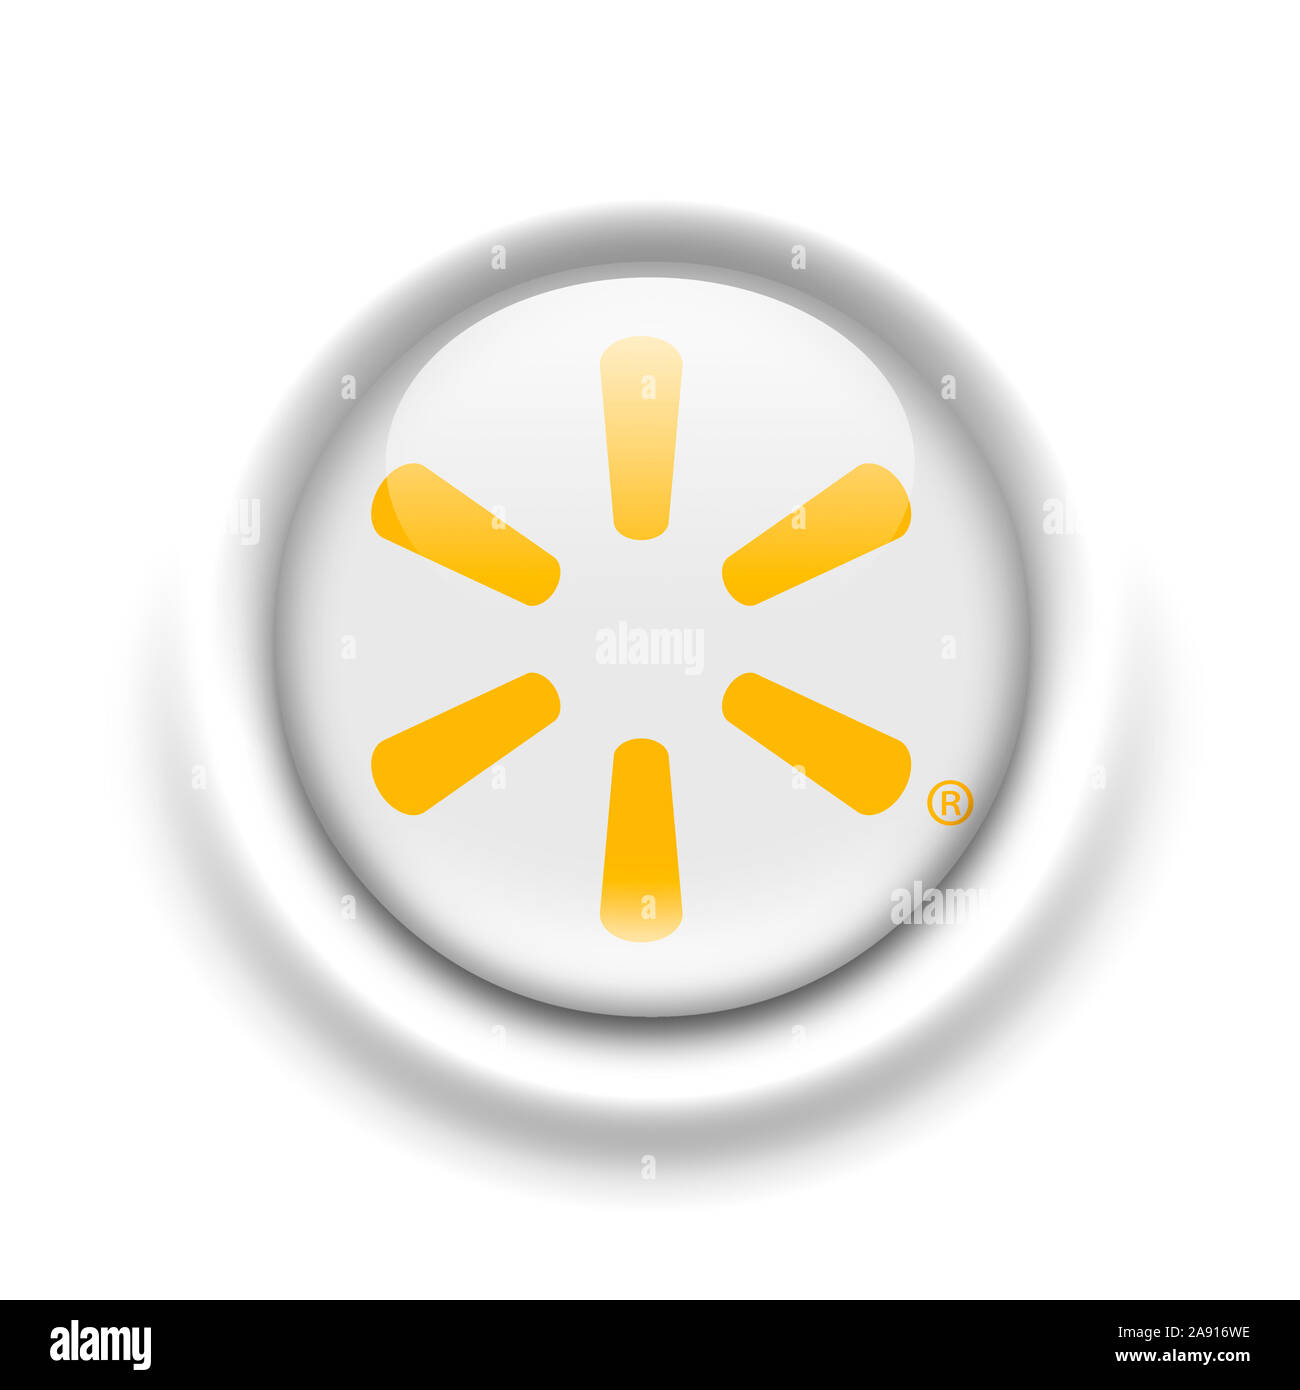 Walmart Logo Roblox Image ID